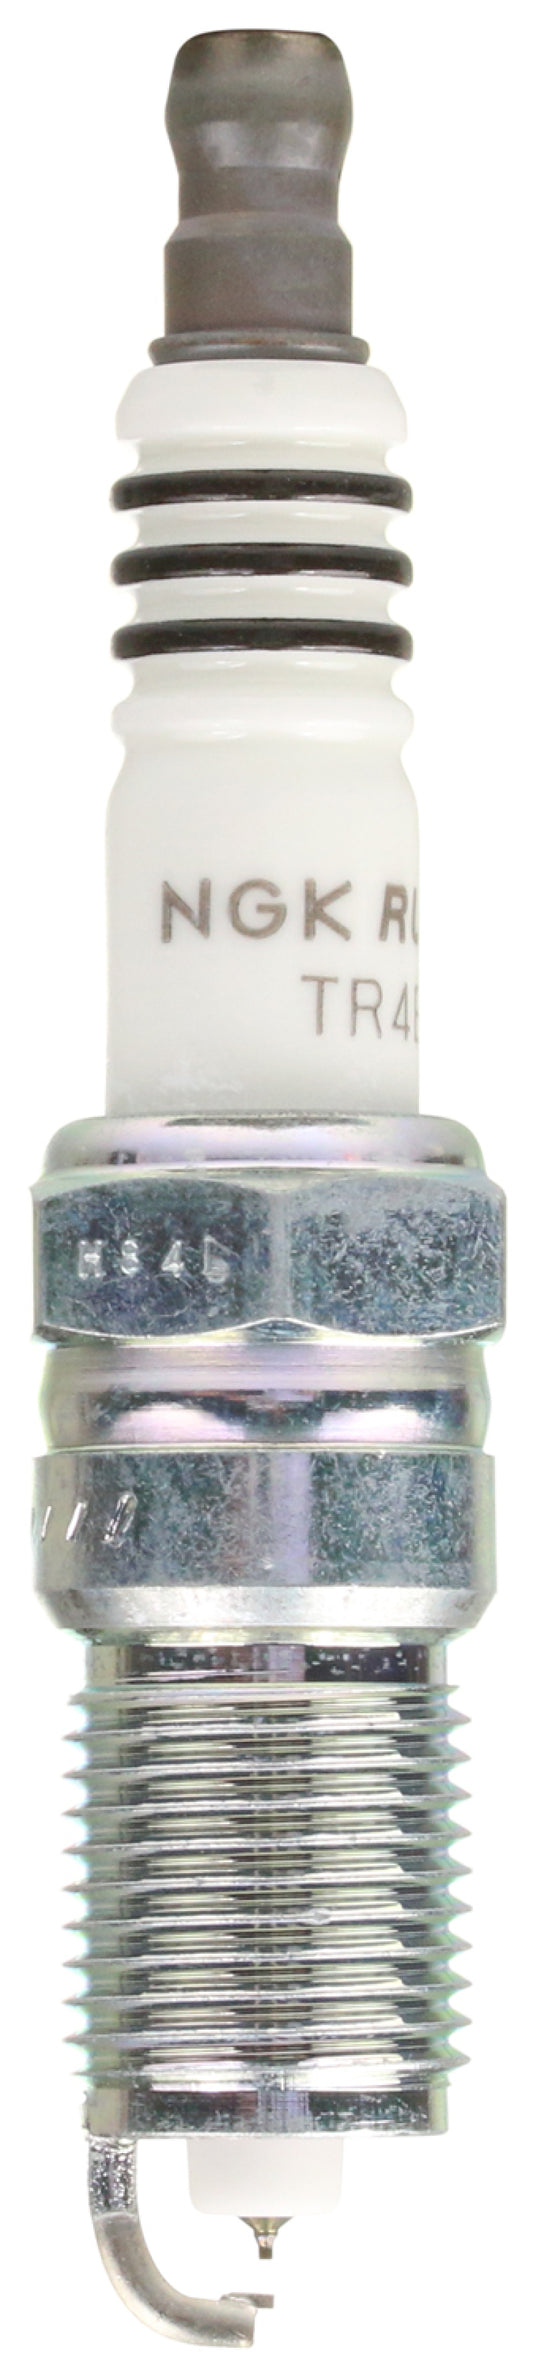 NGK Ruthenium HX Spark Plug Box of 4 (TR4BHX)